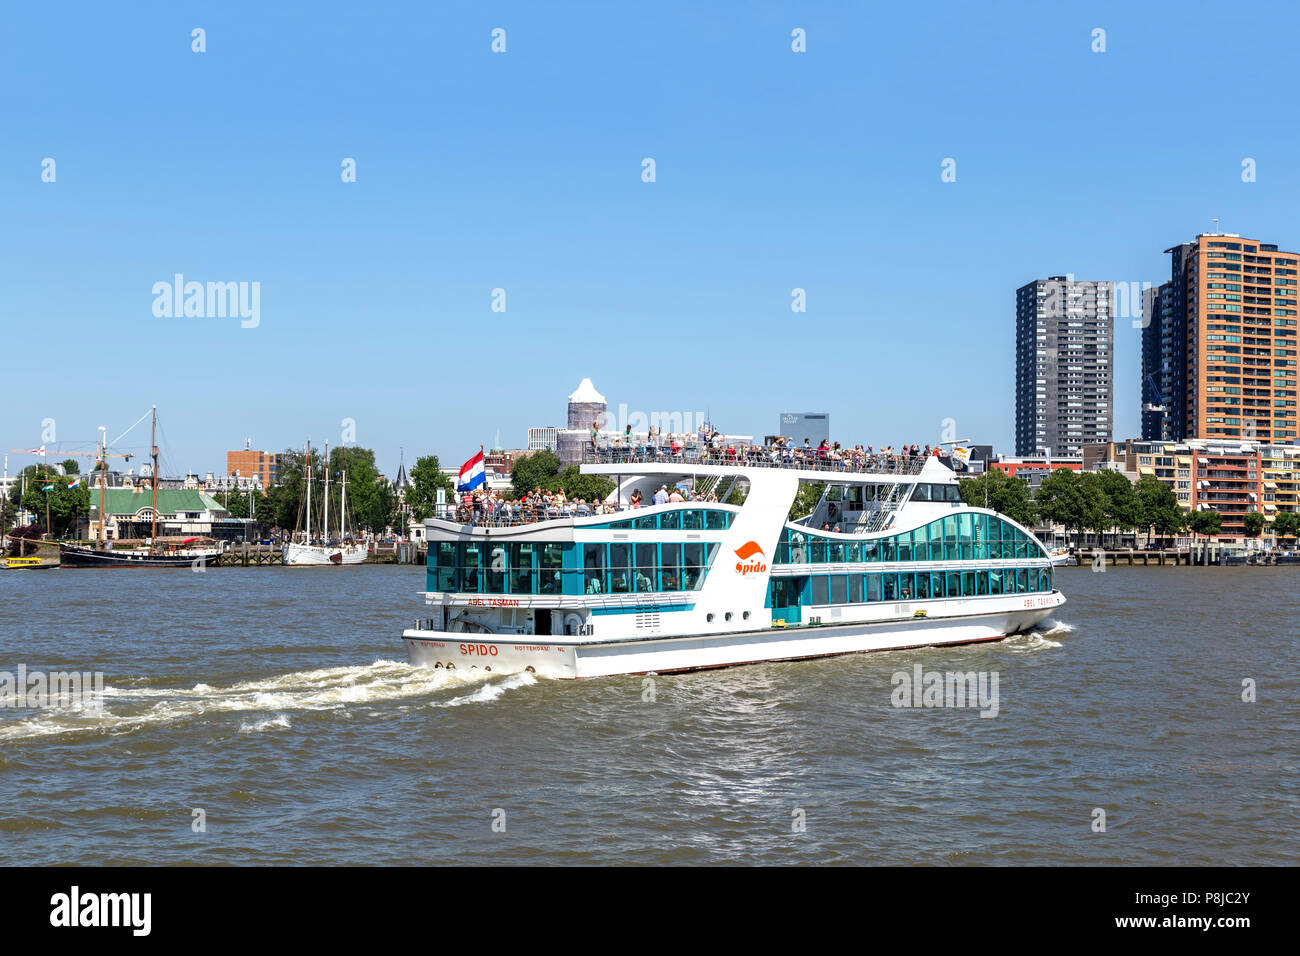 A SPIDO passenger ship, ferrying tourists across Nieuwe Maas, Rotterdam, South Holland, The Netherlands. Stock Photo